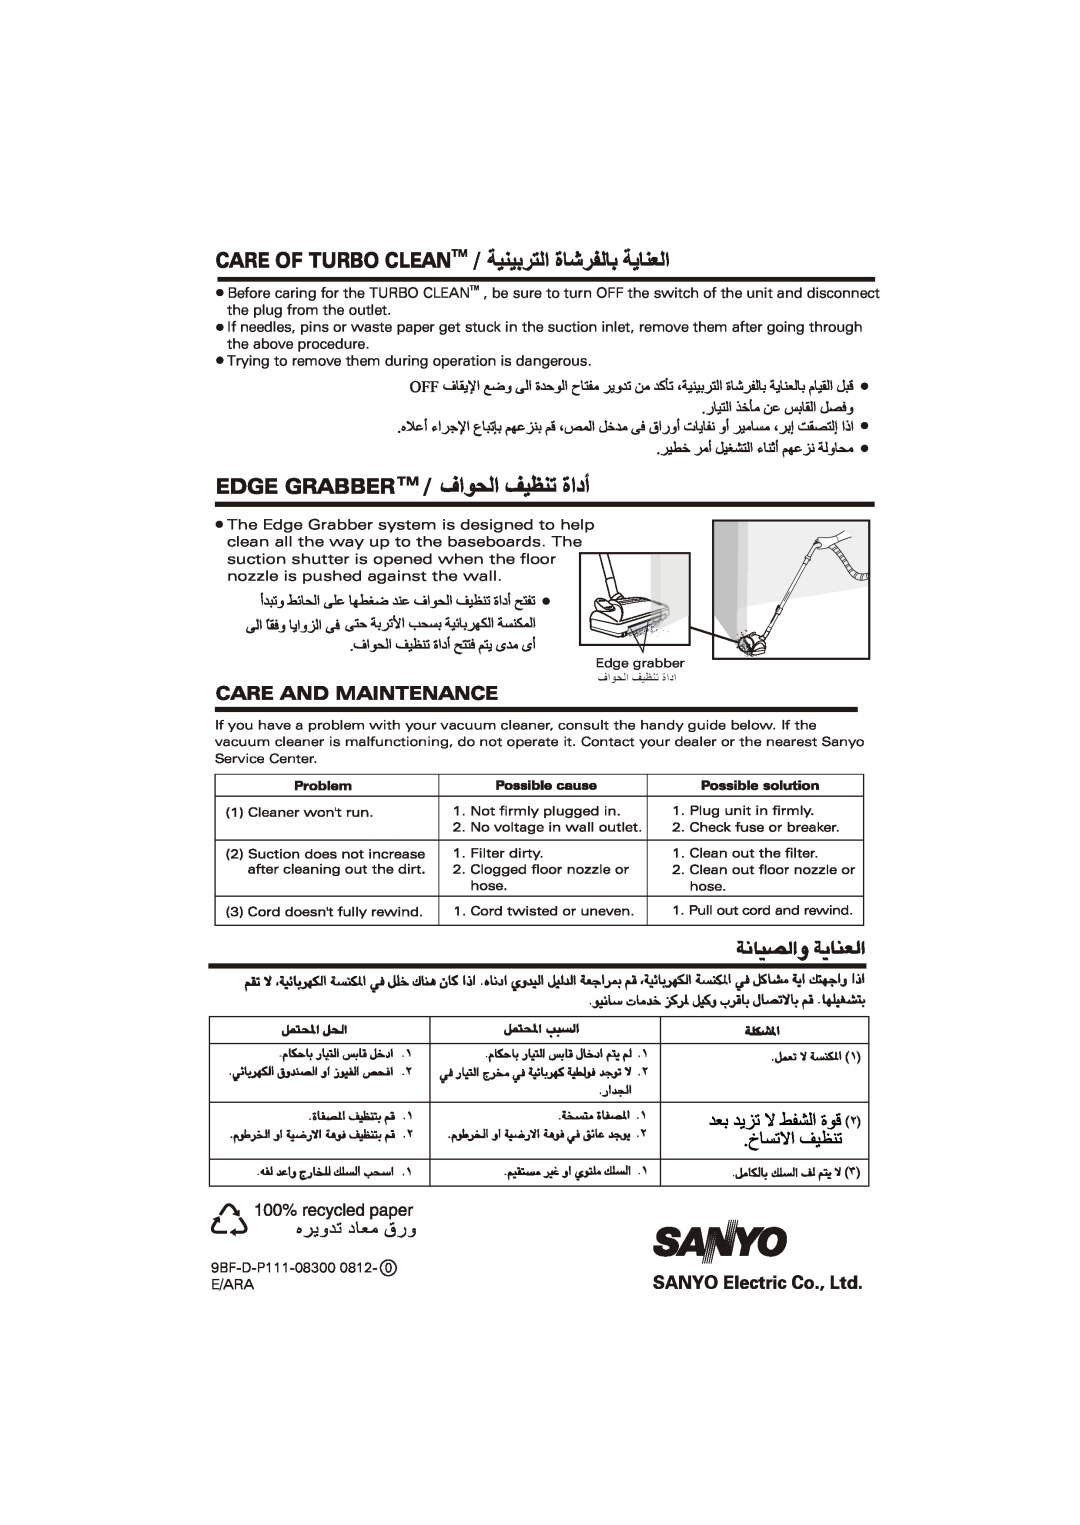 Sanyo SC-B555T, SC-B550 manual Care Of Turbo Cleantm, Edge Grabbertm, Care And Maintenance 